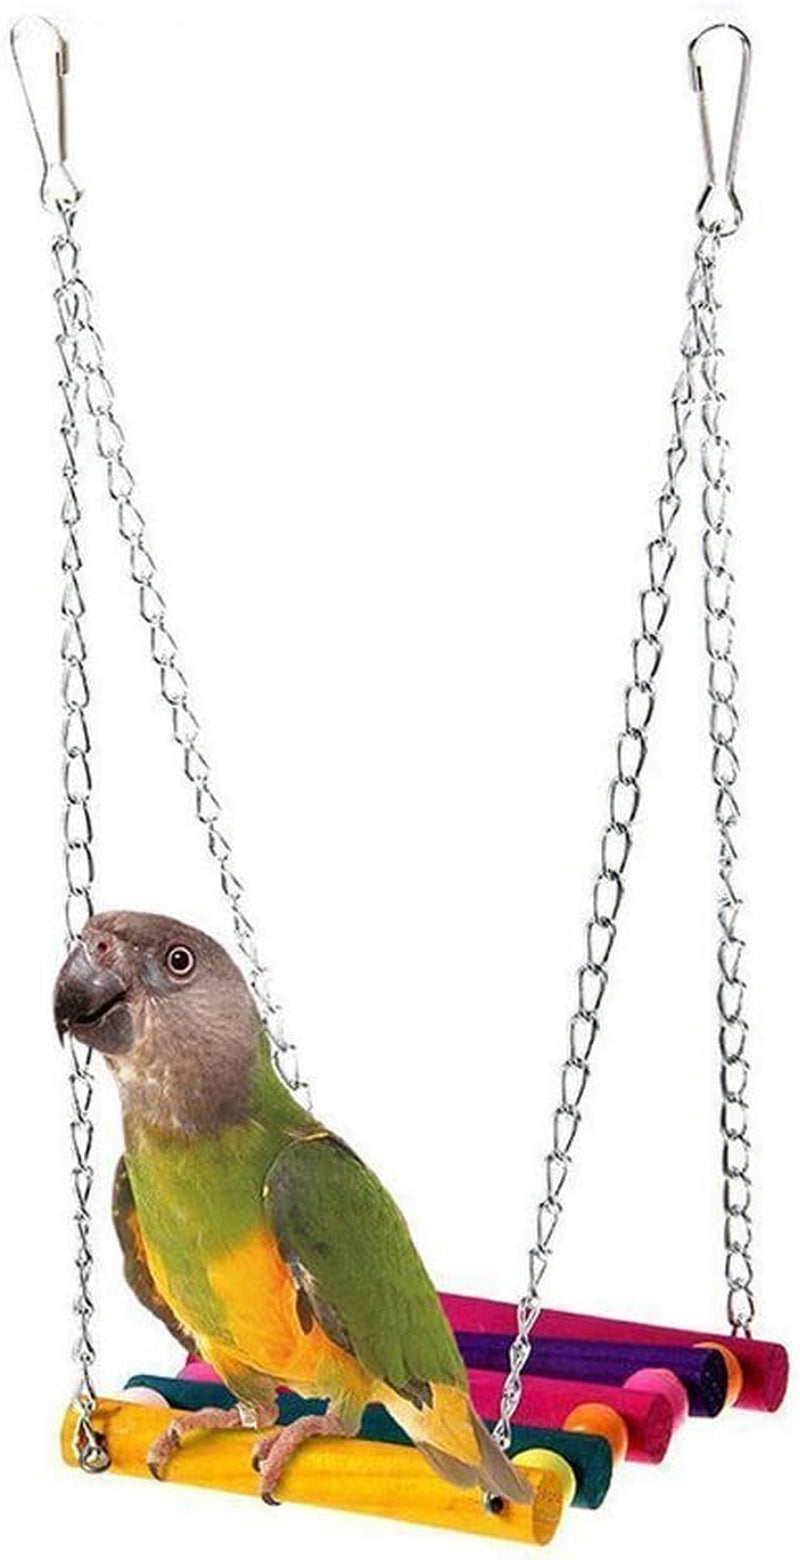 Vktech® 5Pcs Pet Bird Parrot Parakeet Budgie Cockatiel Cage Hammock Swing Toy Hanging Toy (Style A) Animals & Pet Supplies > Pet Supplies > Bird Supplies > Bird Toys Vktech Style A  